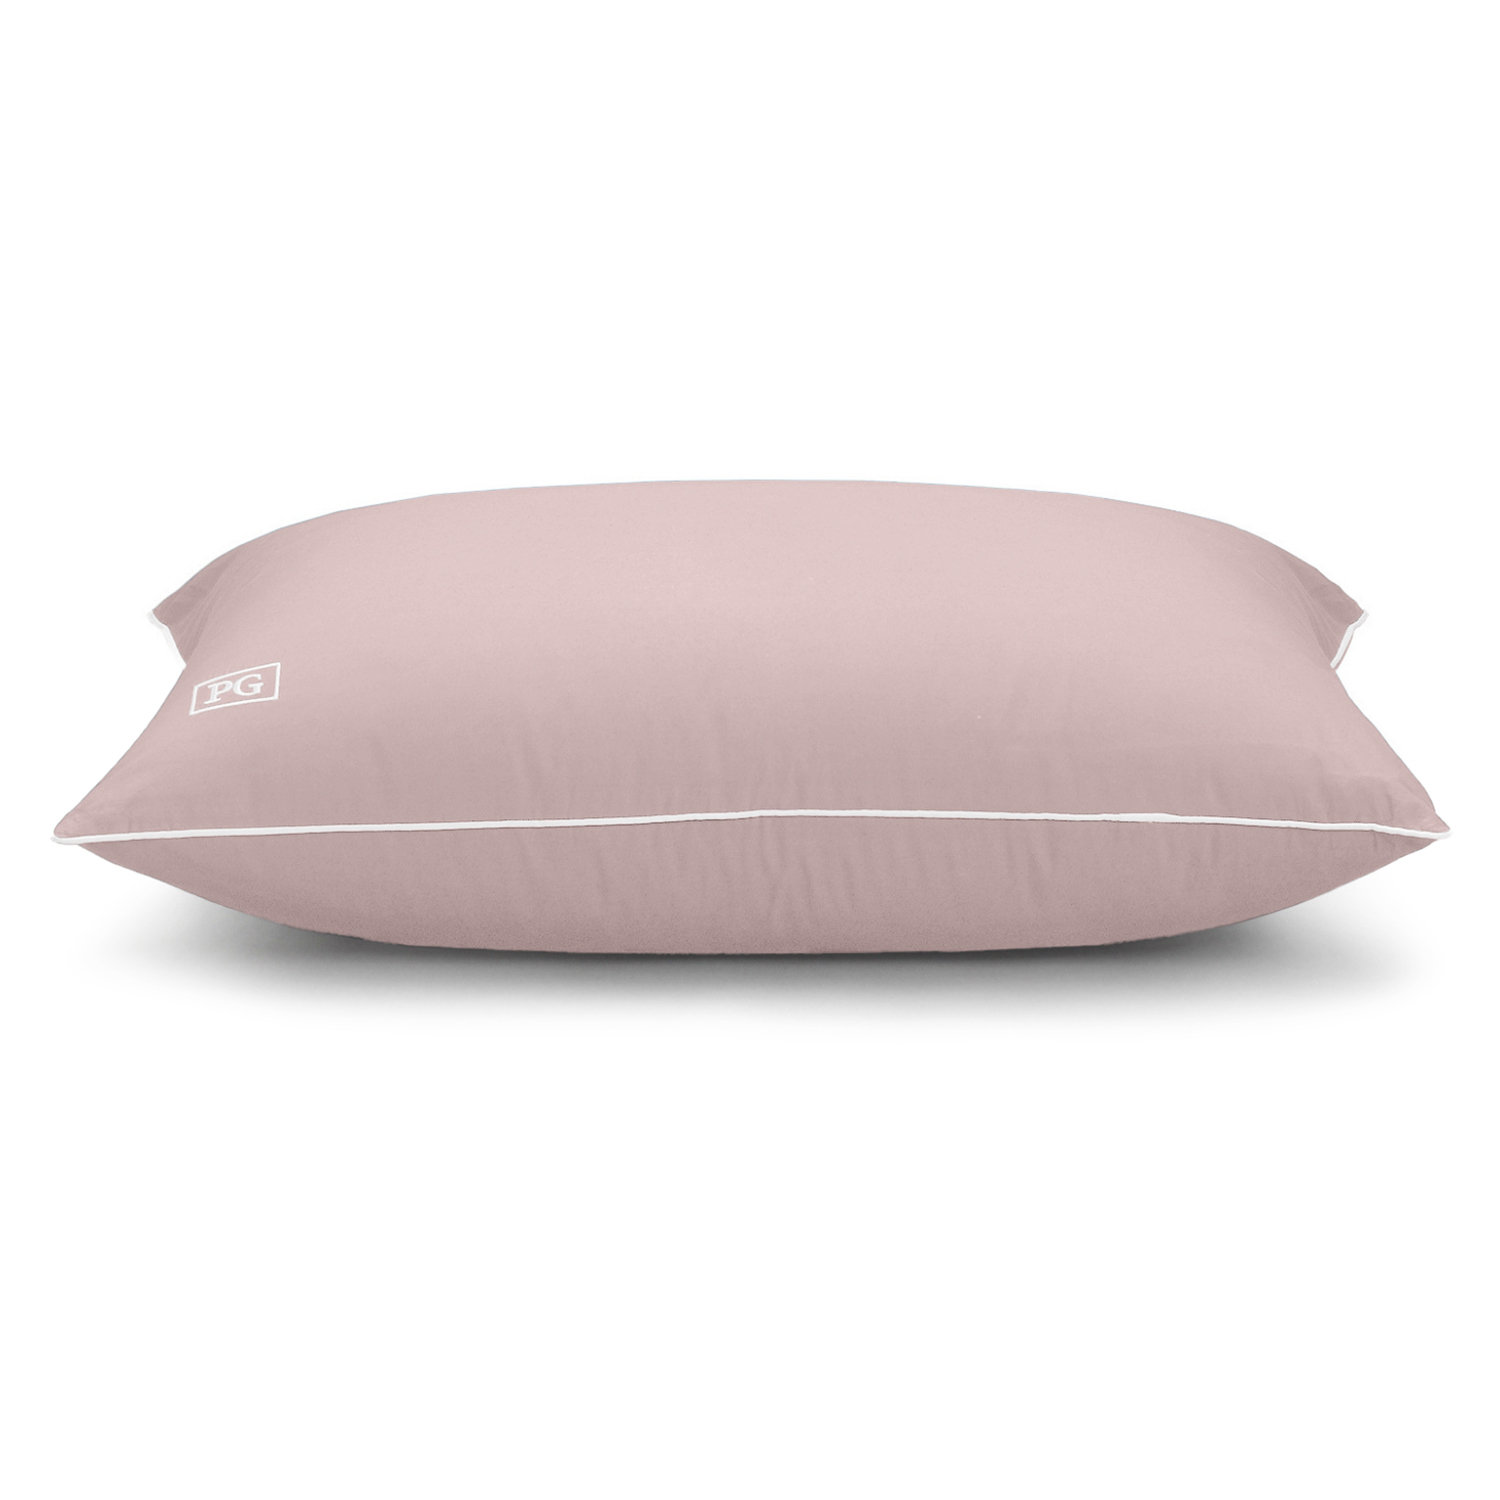 MyPillow 2.0 Cooling Bed Pillow, 2-Pack Queen Medium : Home & Kitchen 